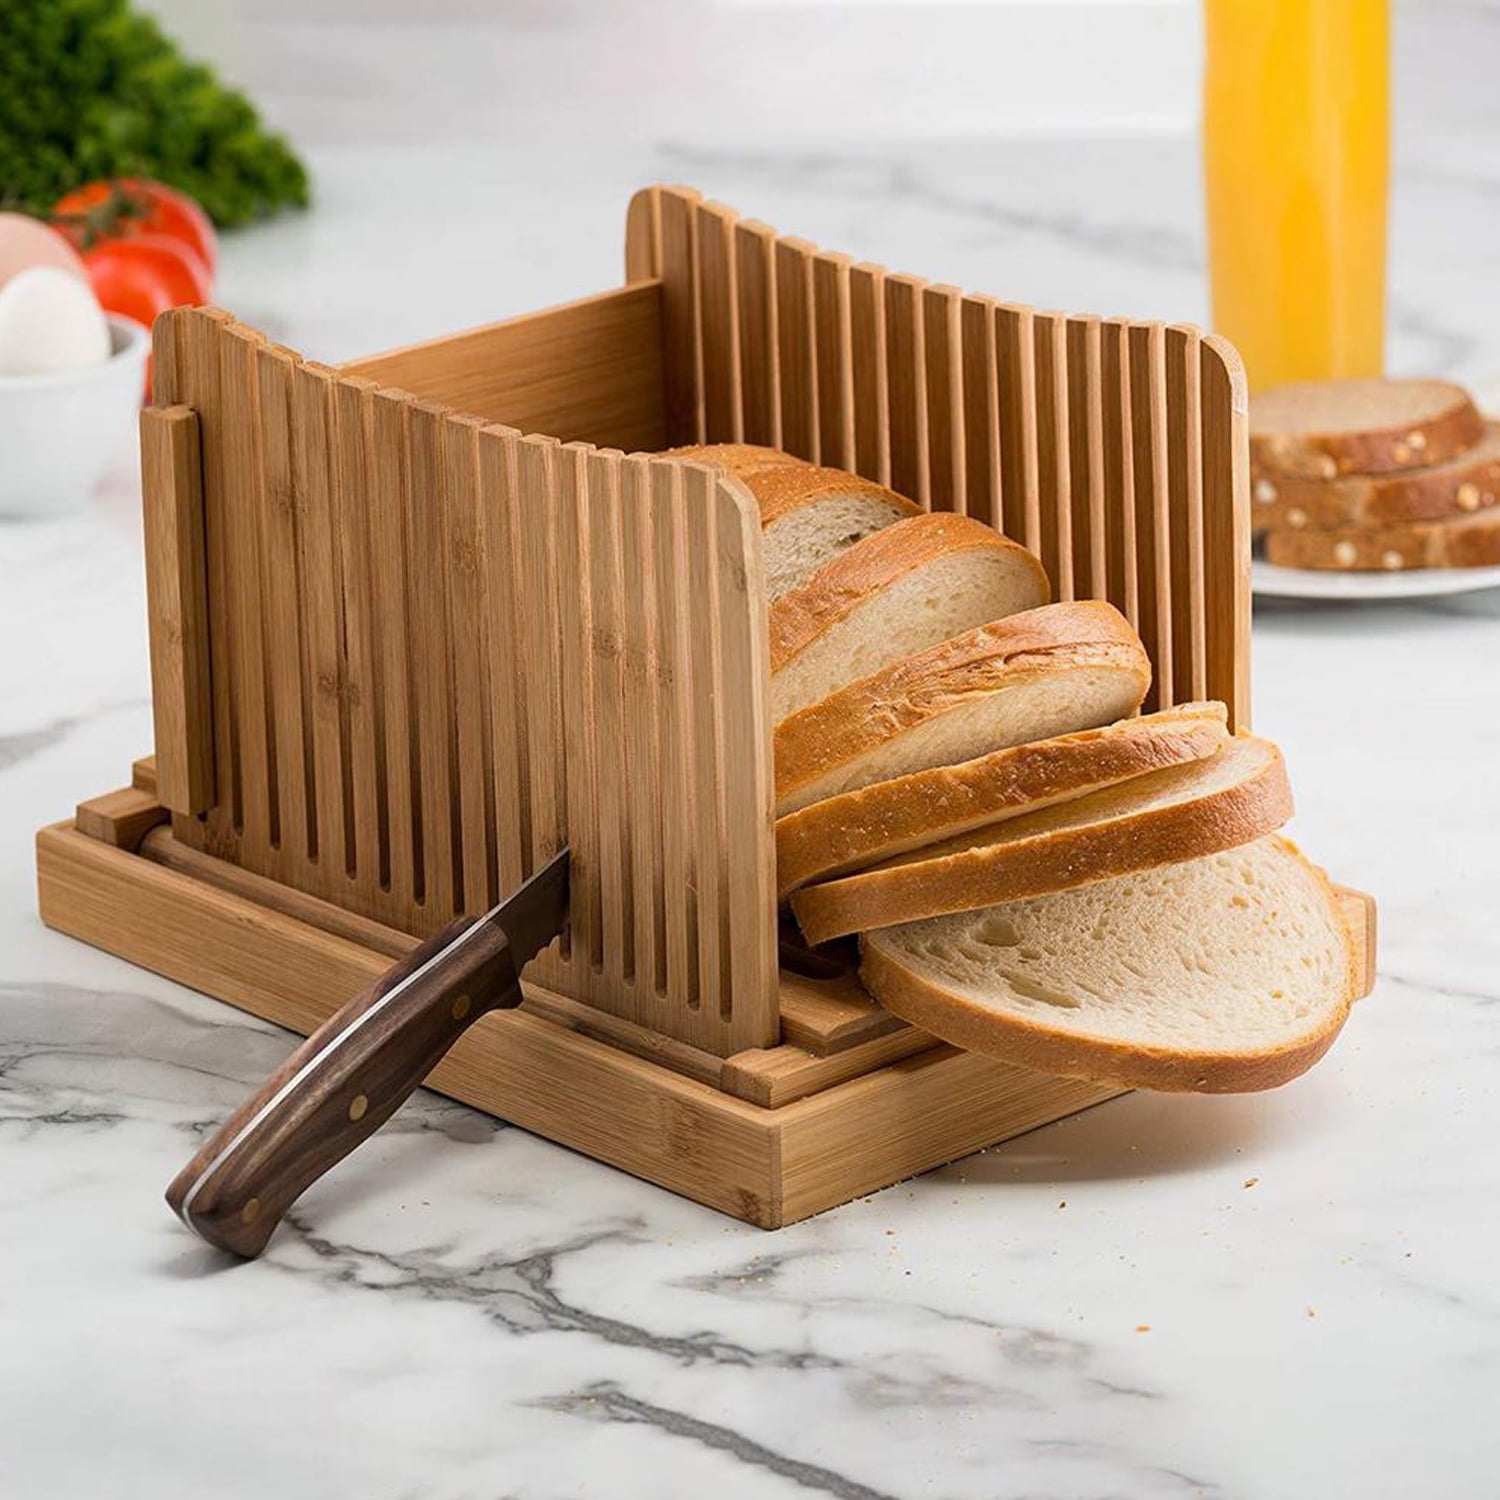 bread/bake/bread slicer cutter Bread slicer compact foldable bread sandwich toast bread slicer 